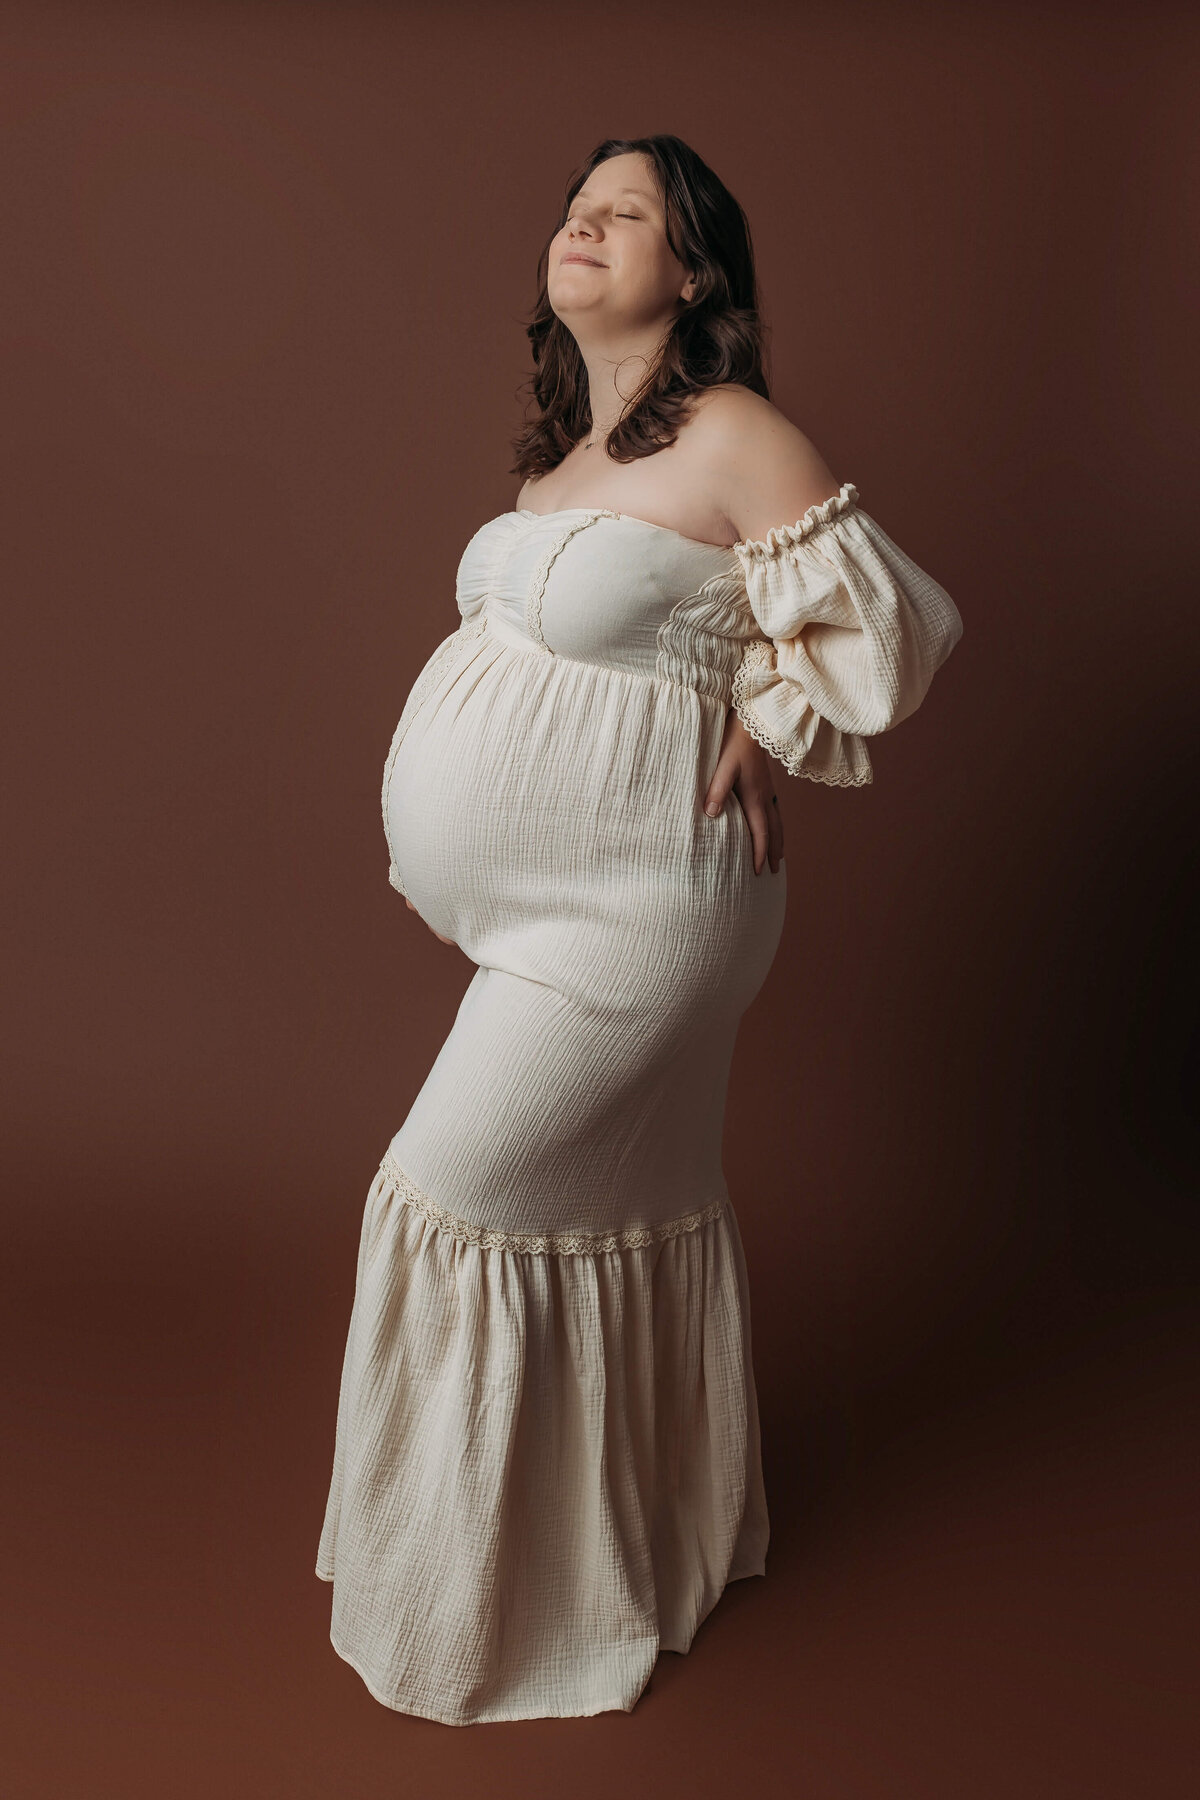 Samantha-harrisburg-maternity-photography-outdoor-4